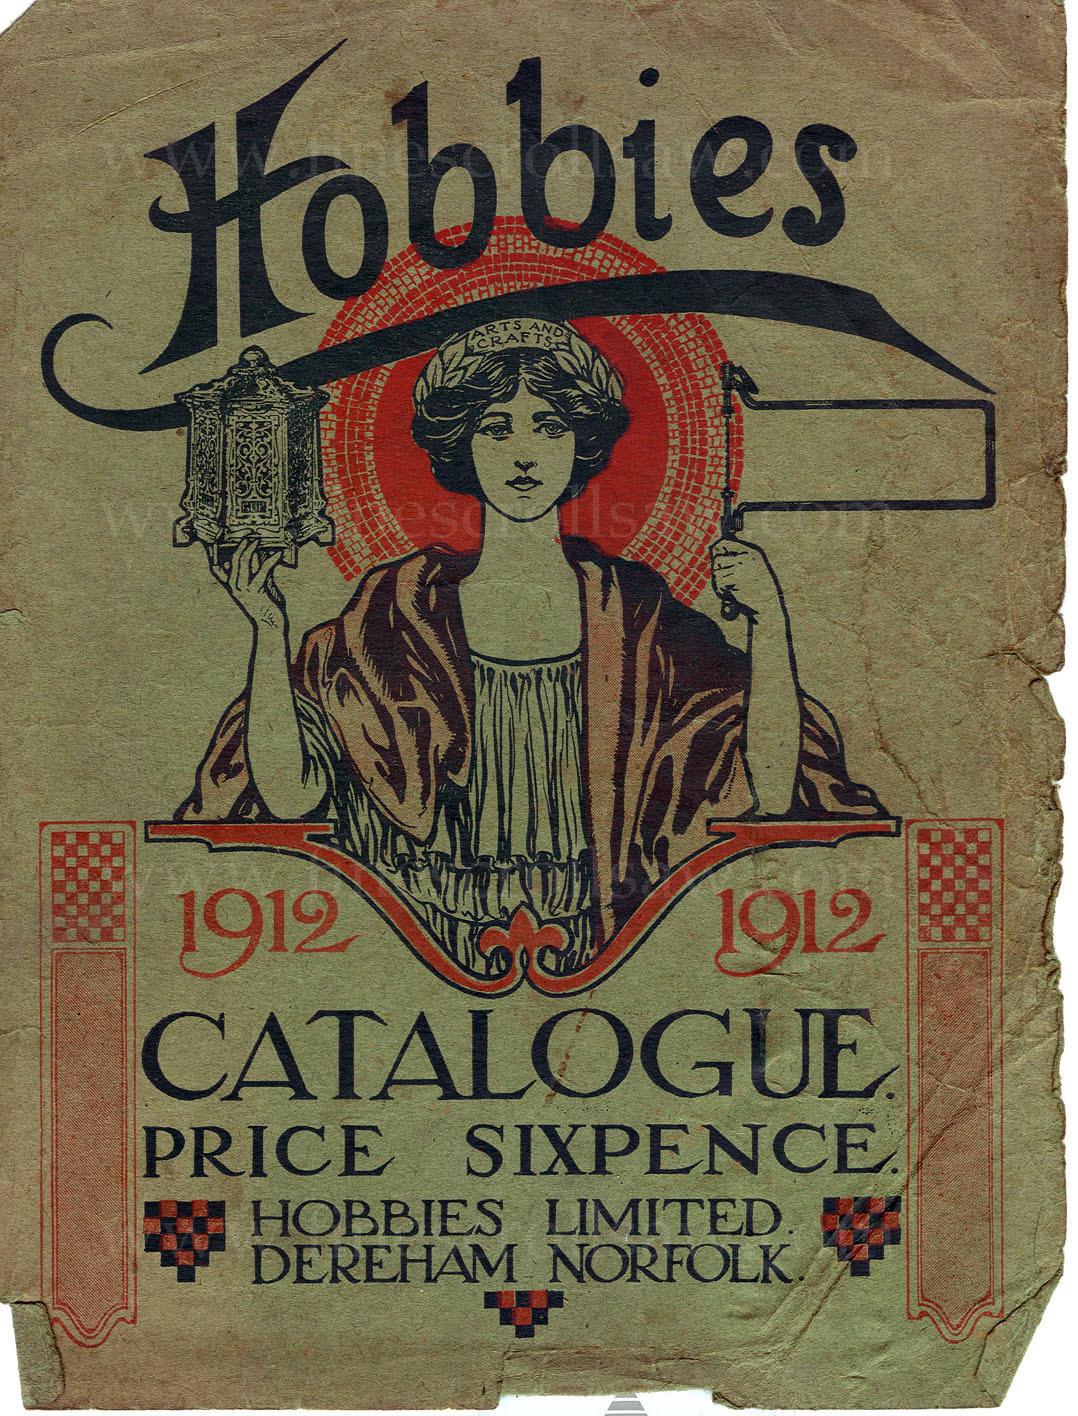 Hobbies fretwork catalogue, England, 1912 по страницам и номерам изделий 1